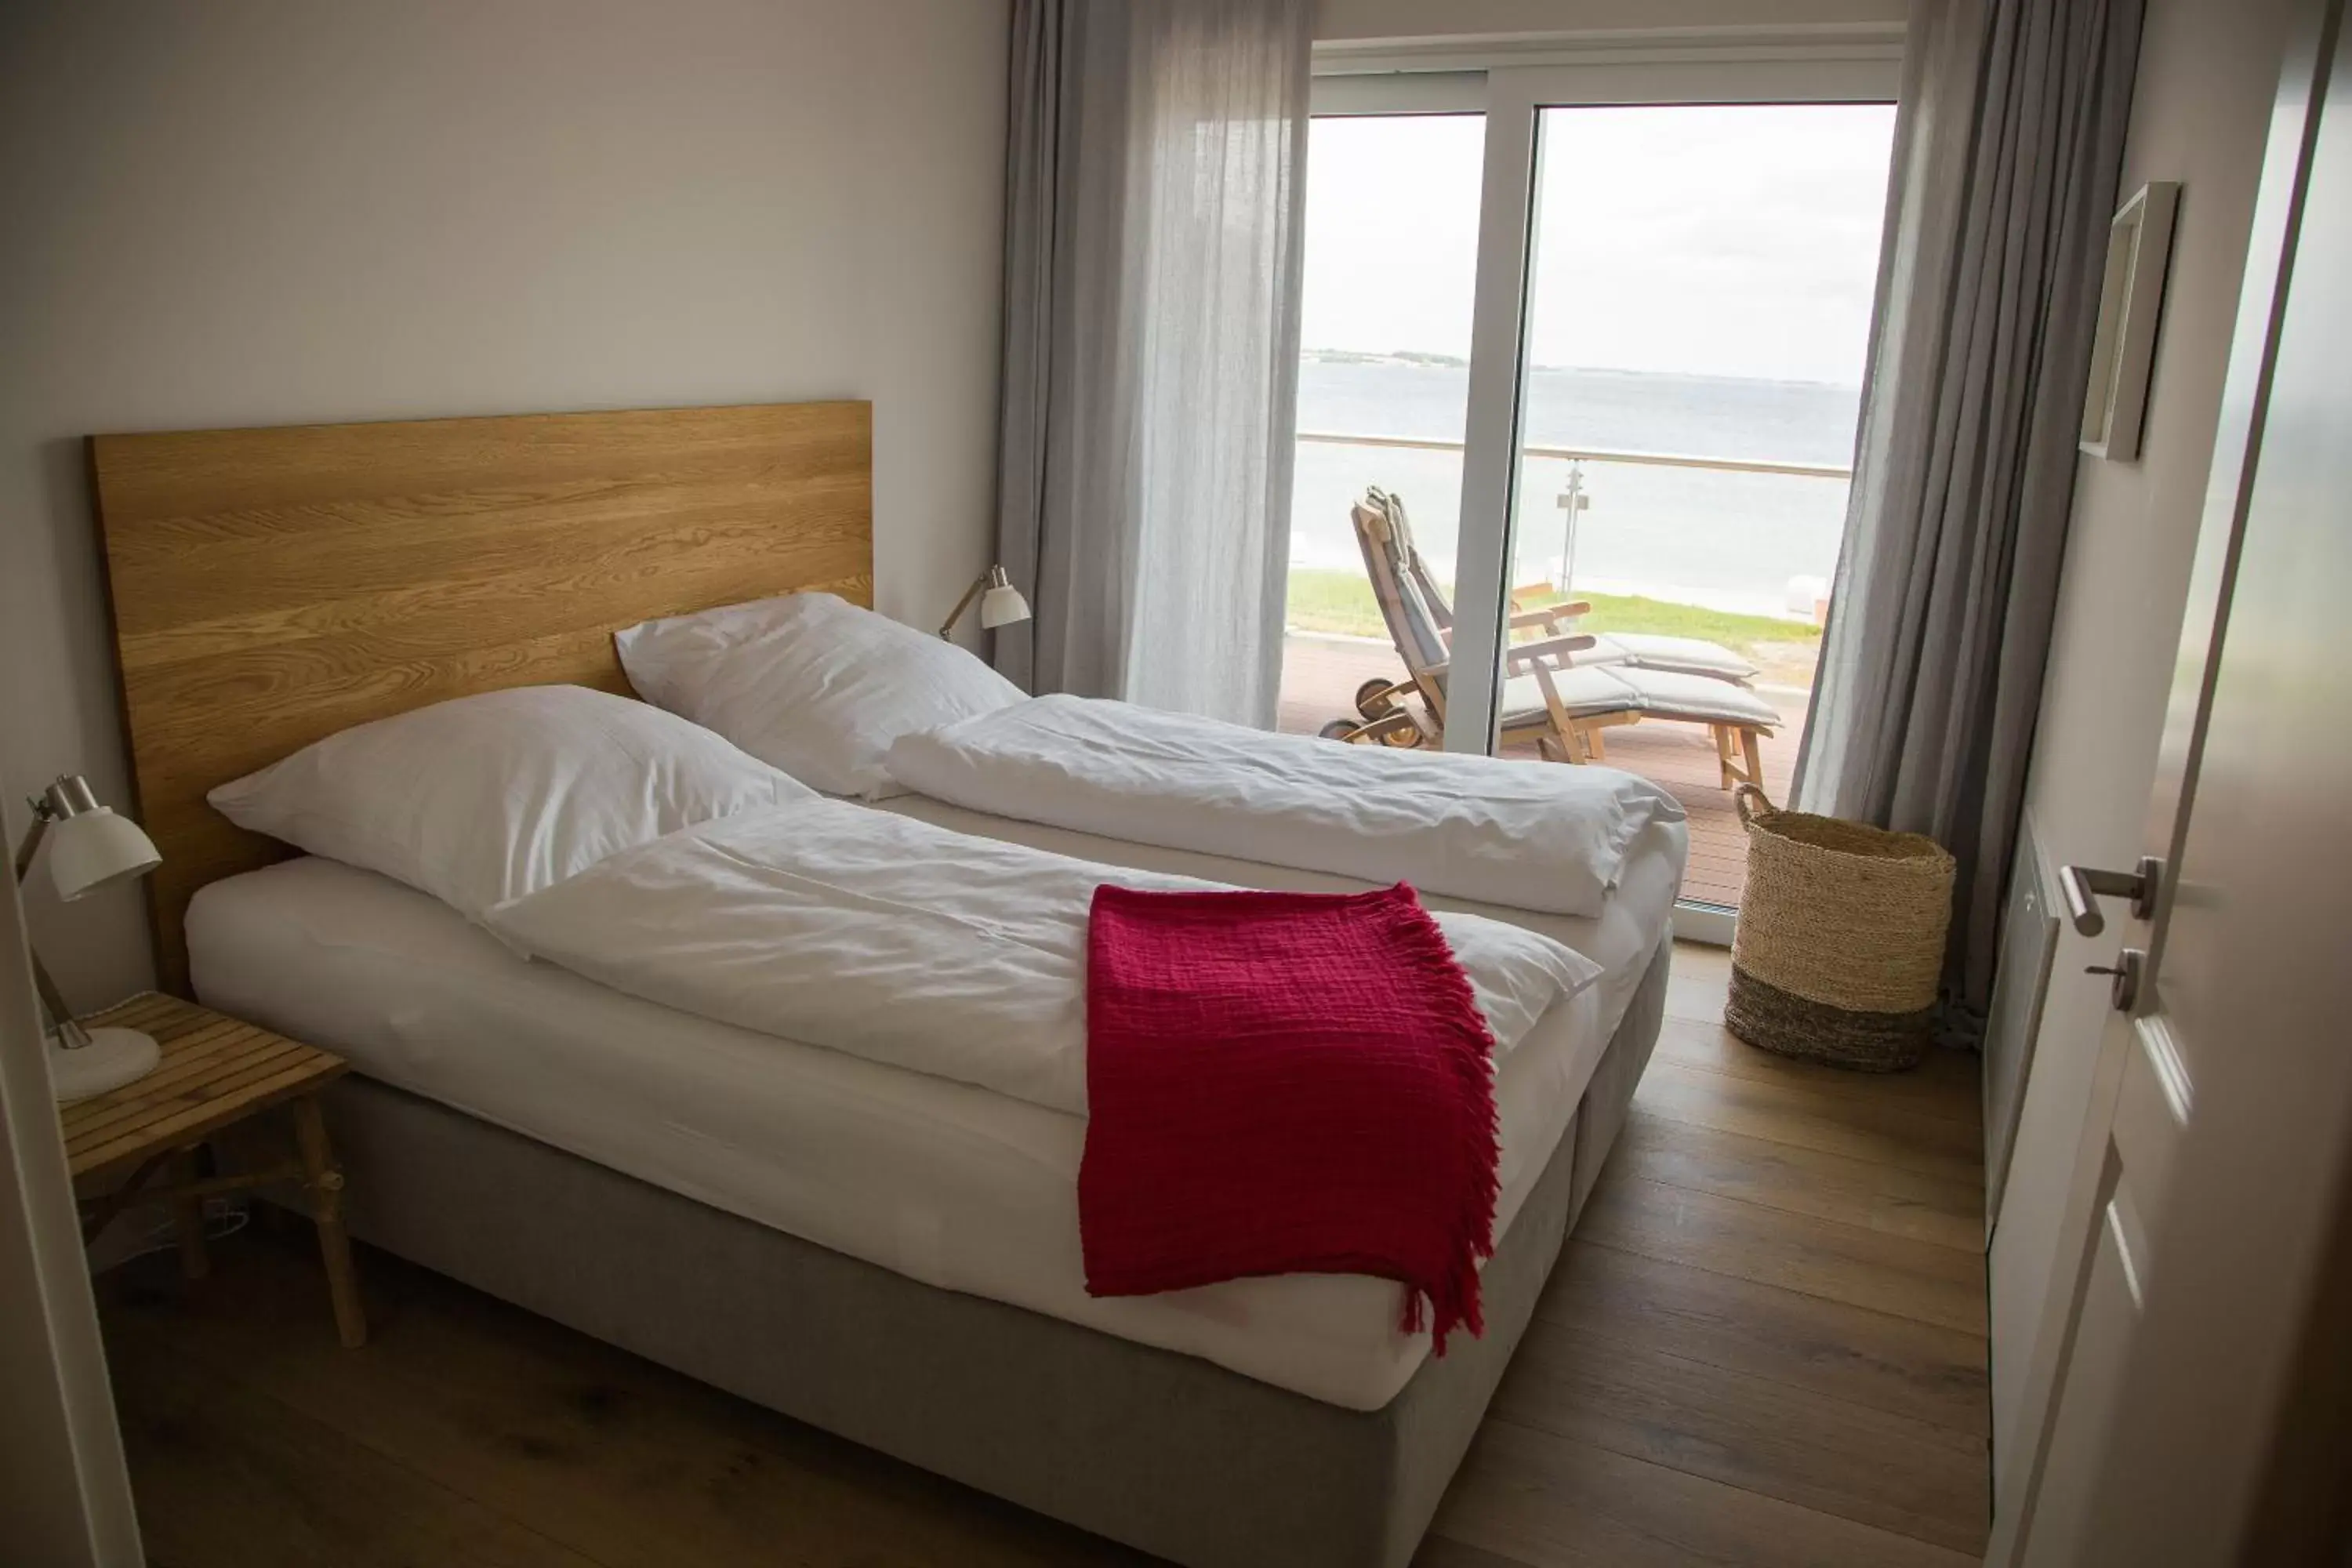 Bedroom, Room Photo in Ostsee-Strandhaus-Holnis